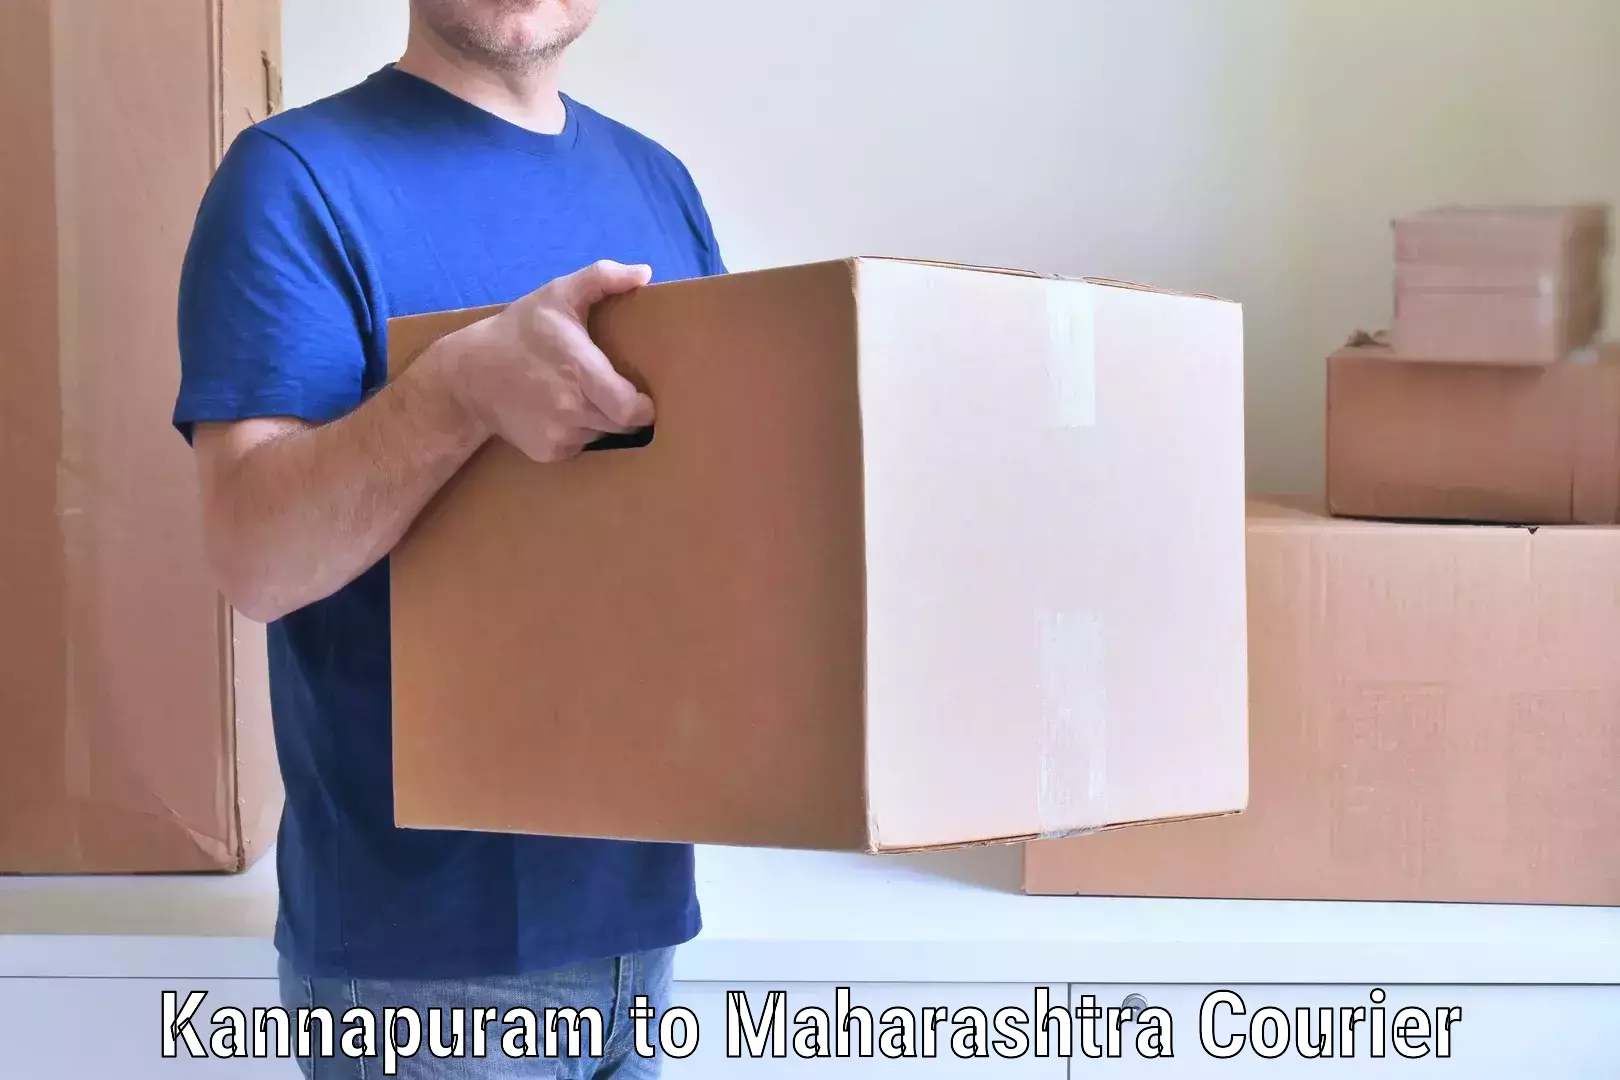 Furniture moving experts Kannapuram to Ahmednagar